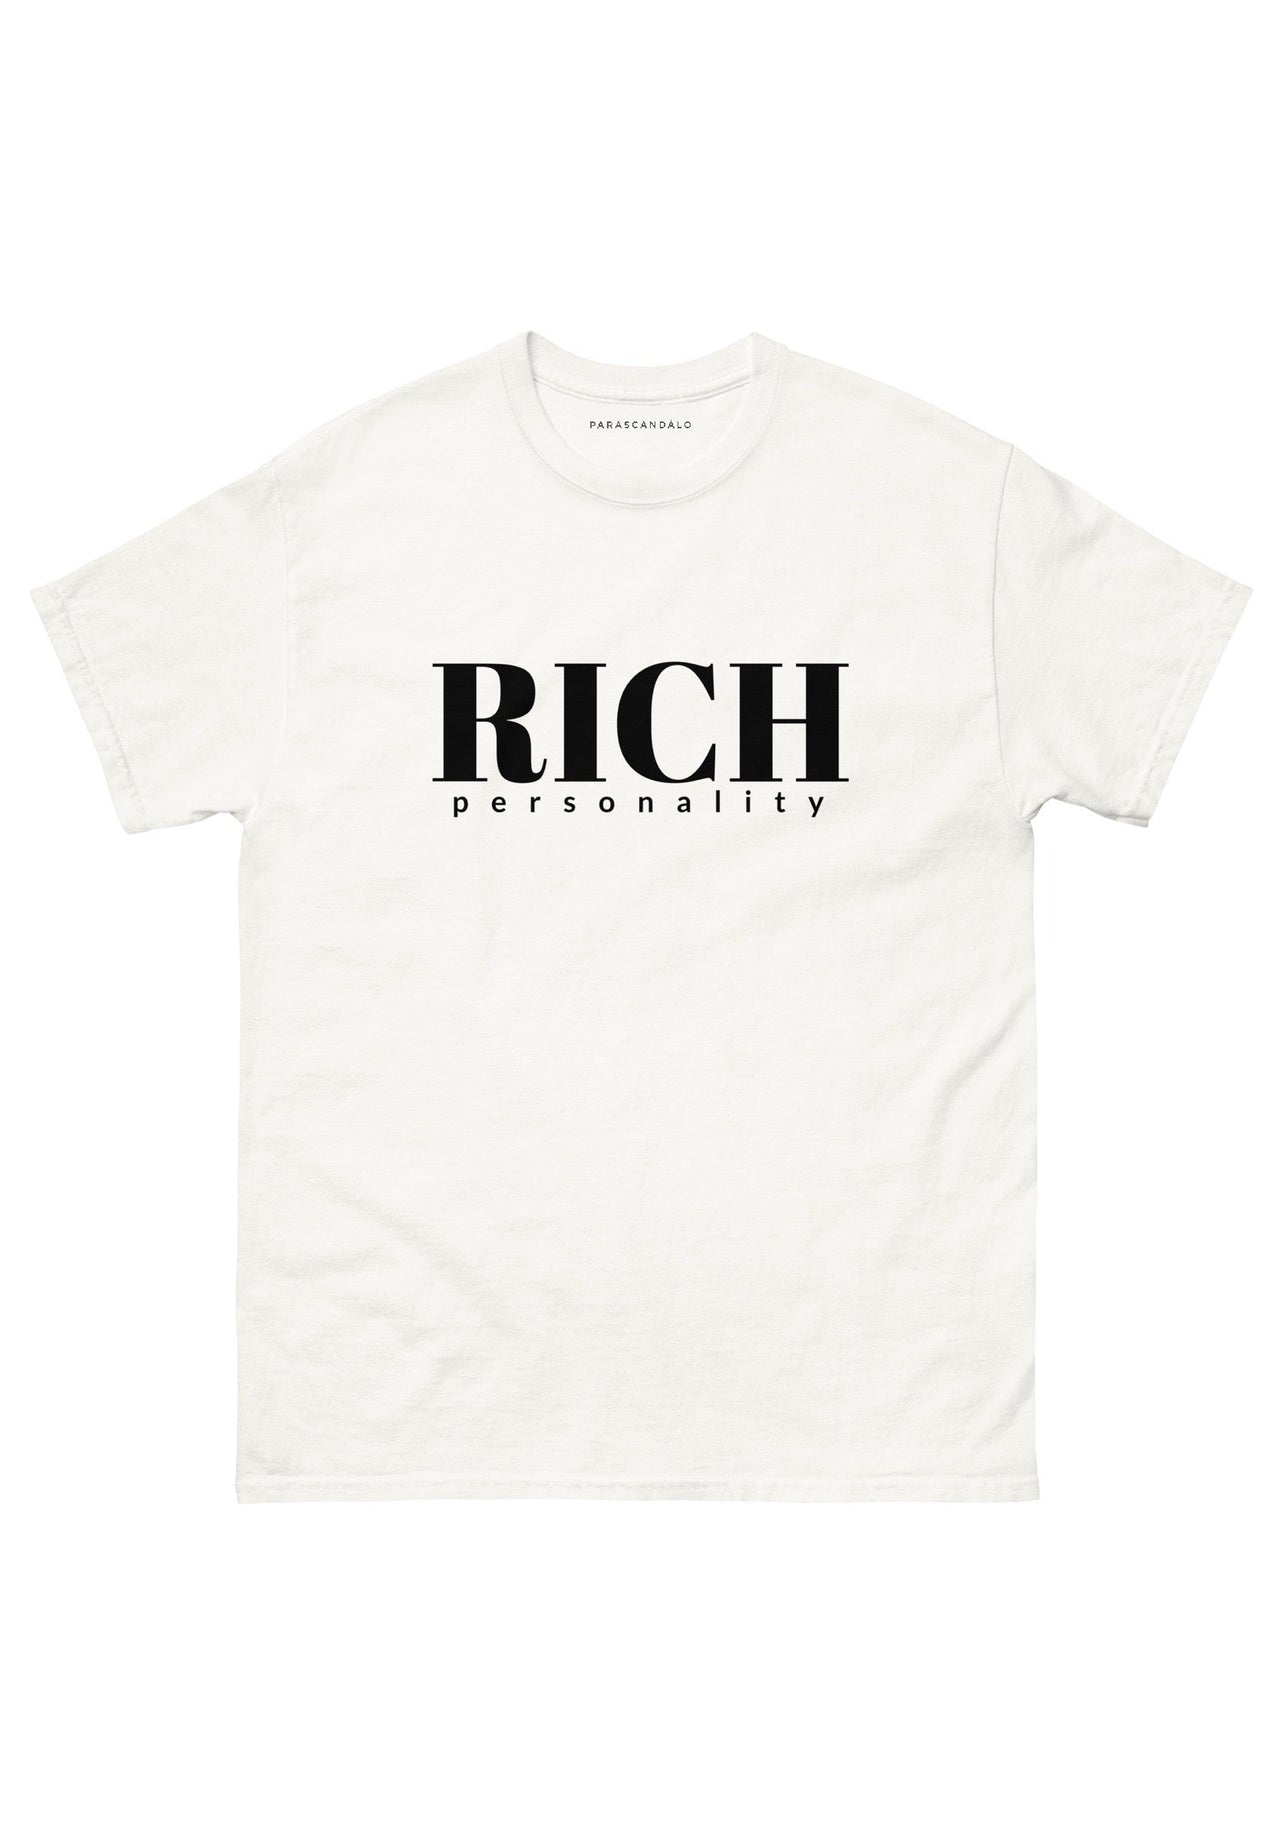 RICH PERSONALITY T-Shirt